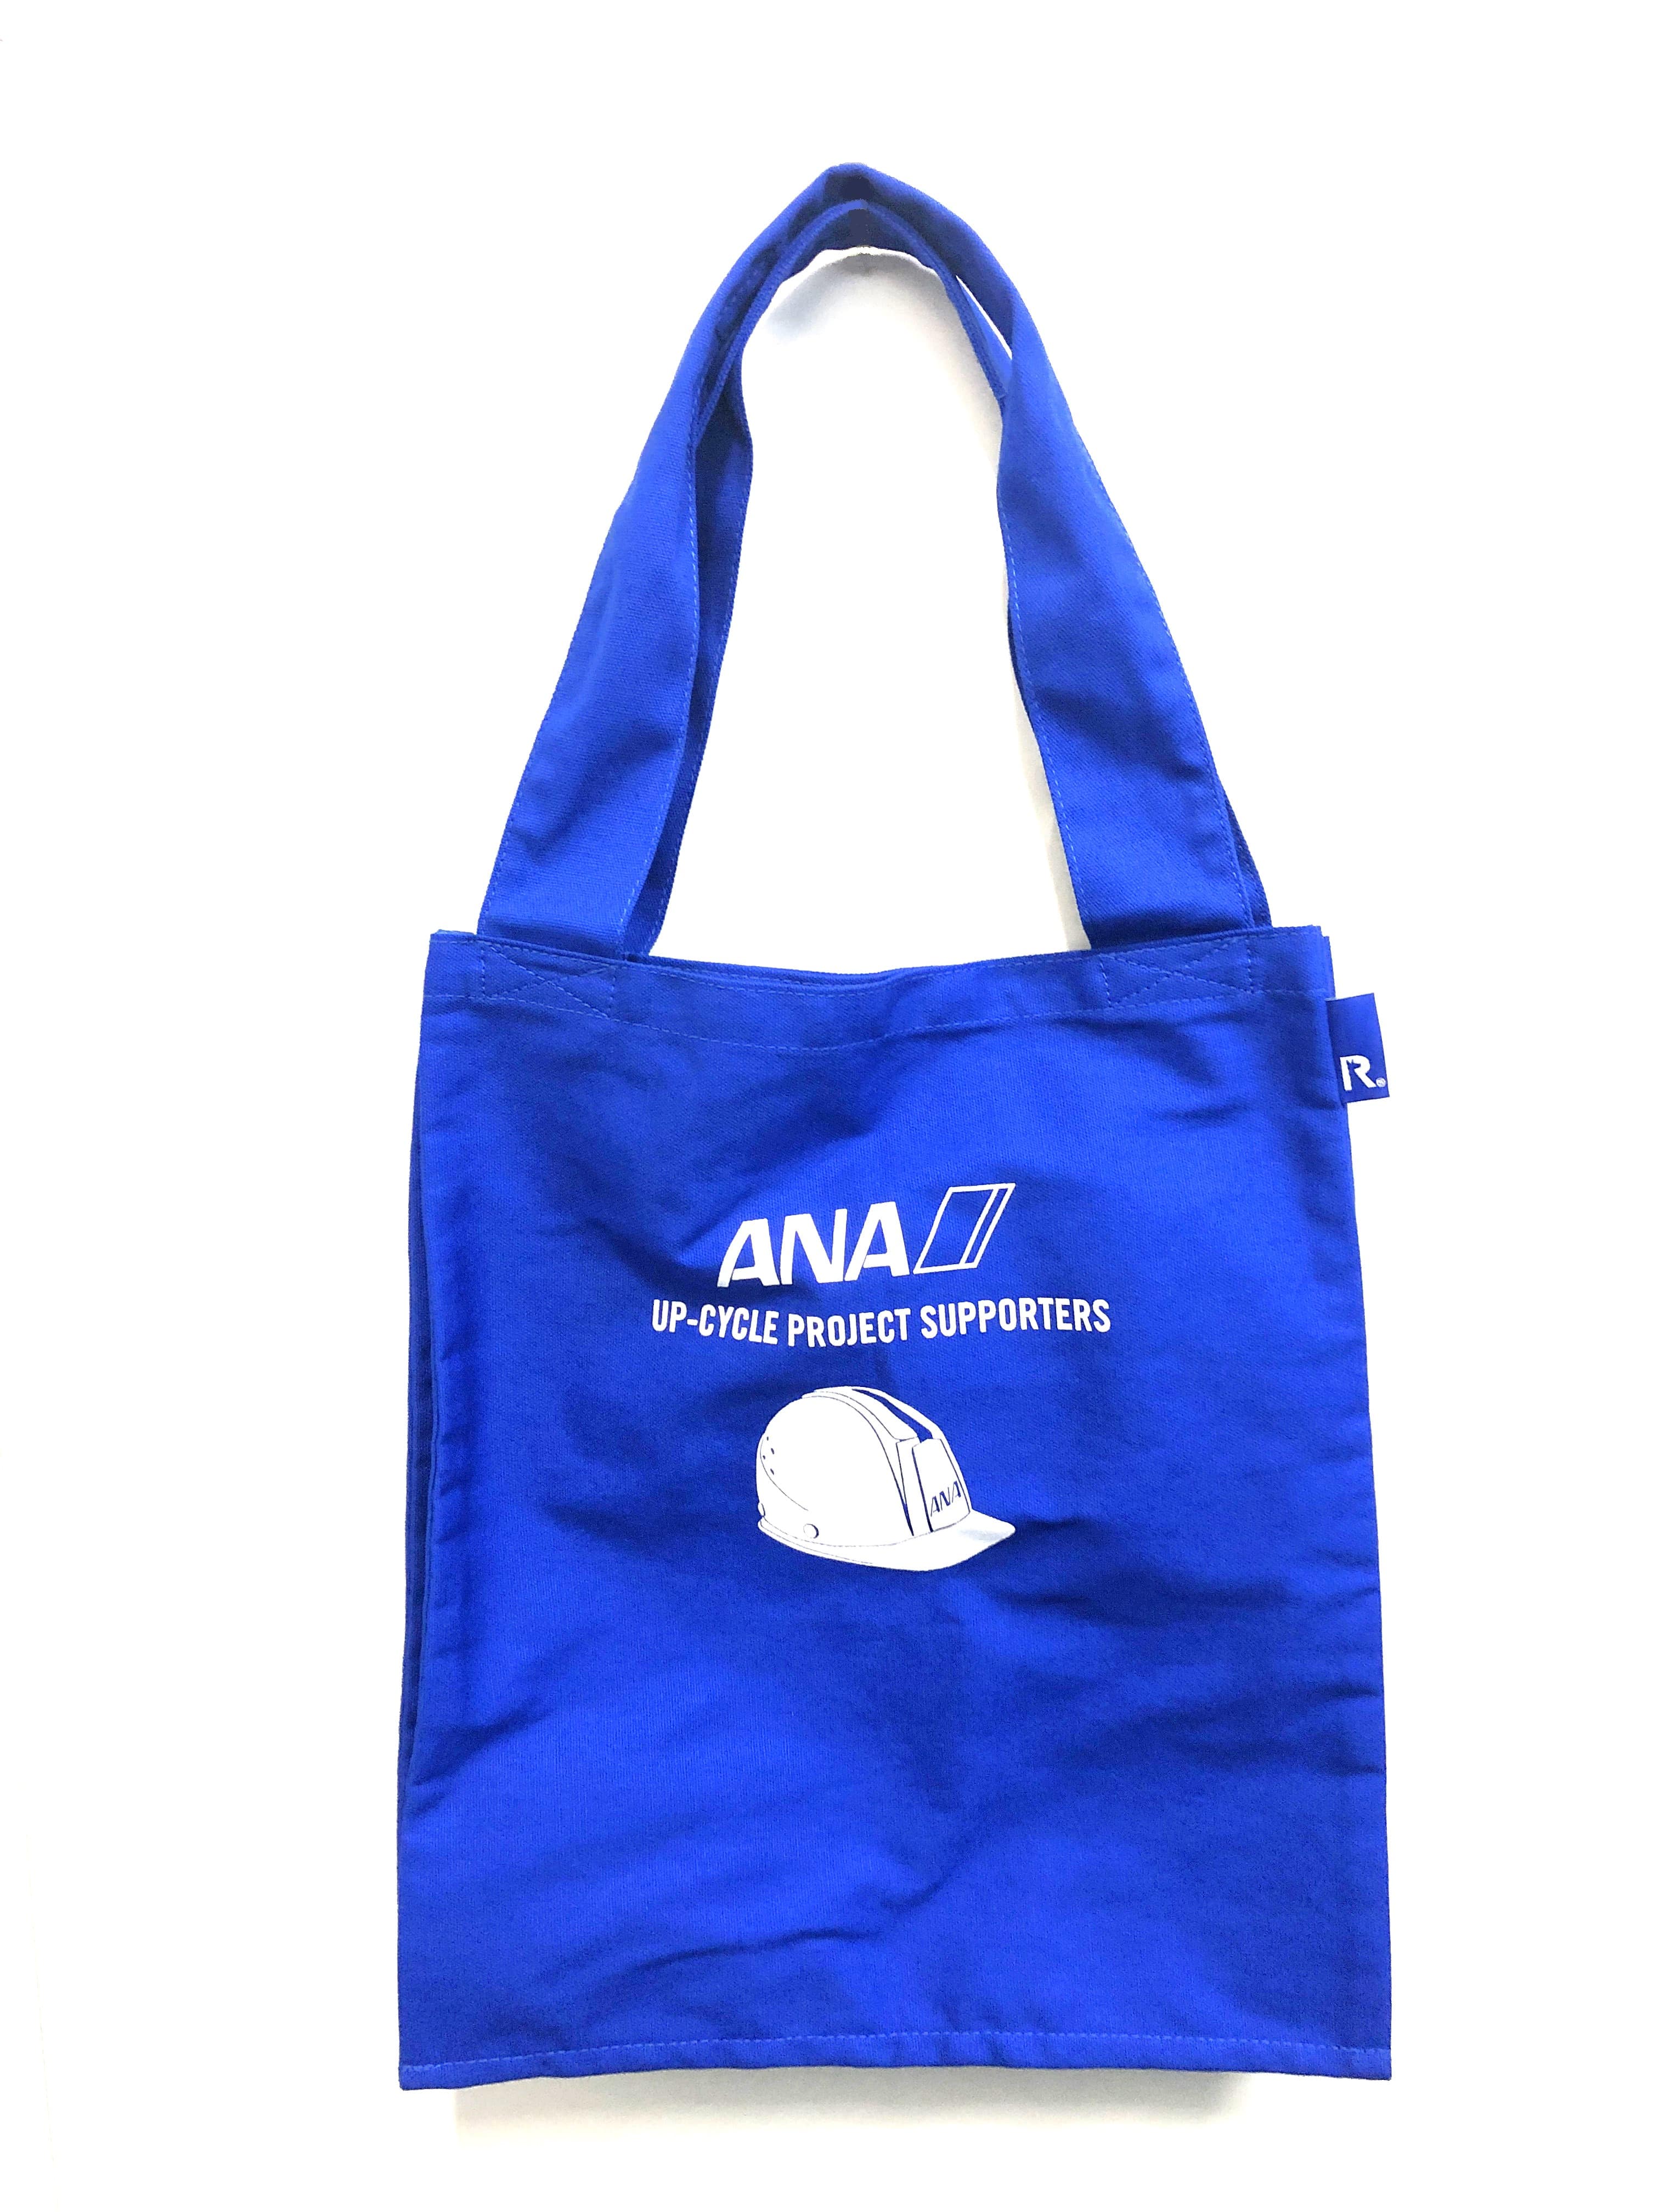 ANA アップサイクル トートバッグ 小 整備士 UP-CYCLE航空会社ANA